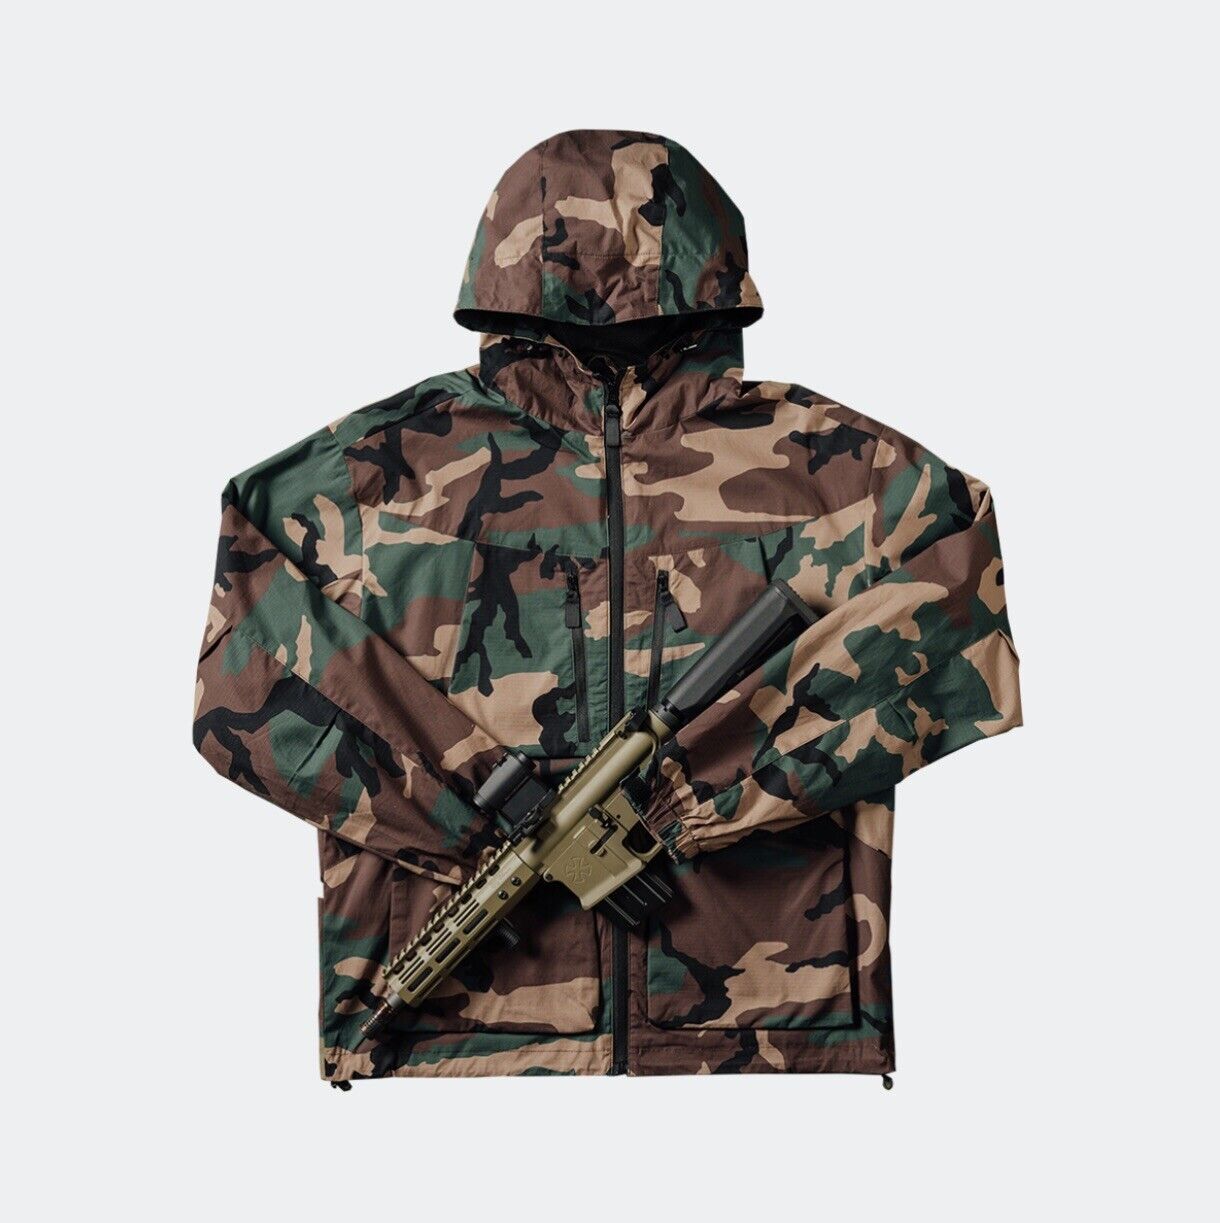 Qilo Tactical QILO x WRMFZY Browning Jacket in M81 Woodland Size